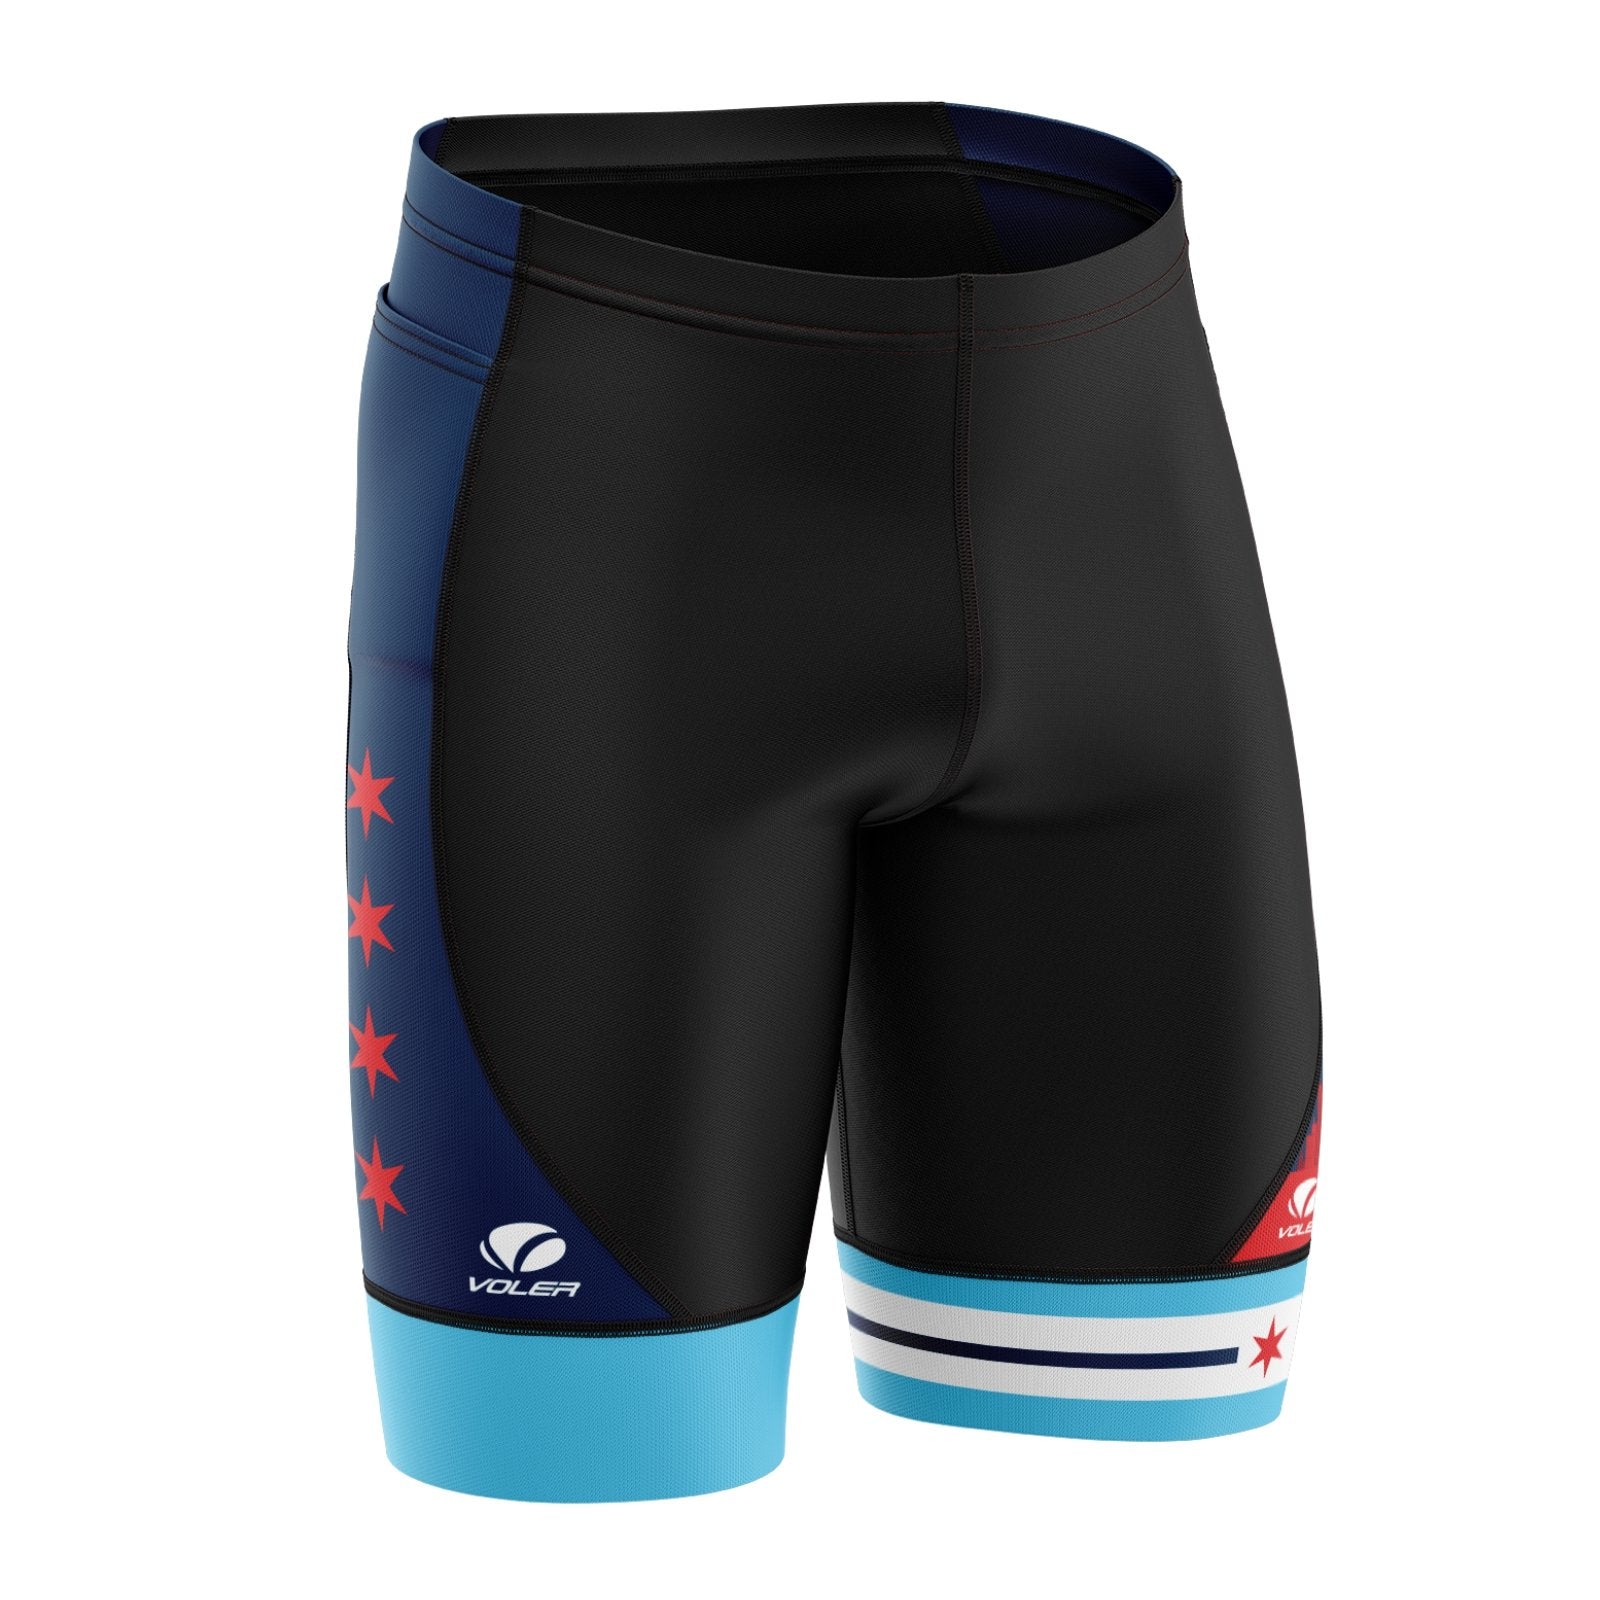 CHI TRI Voler Men's Tri-Shorts - Navy / Black Sides Star Design